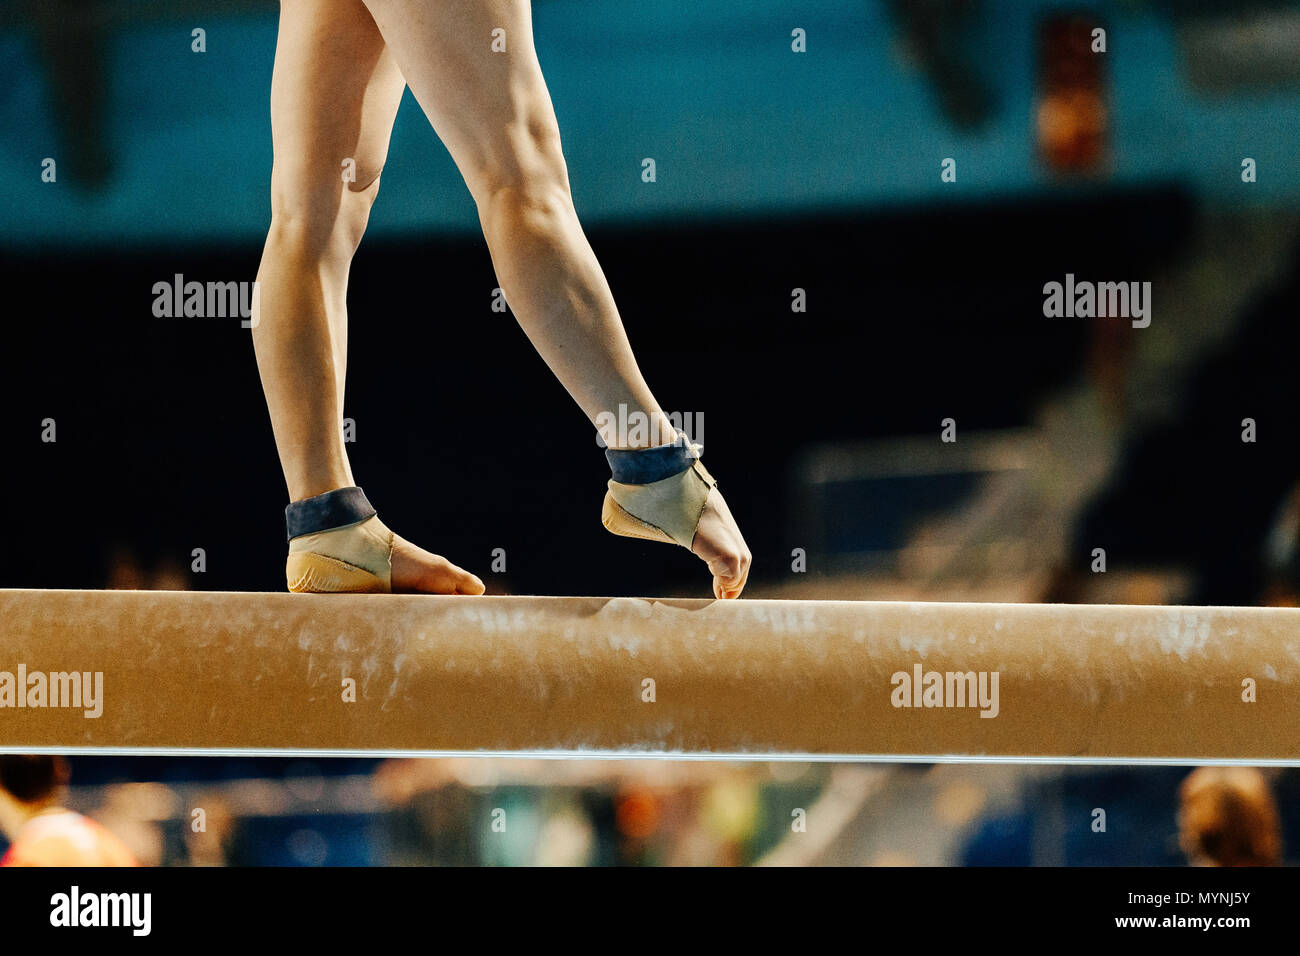 artistic gymnastics legs women gymnast exercises on balance beam Stock Photo